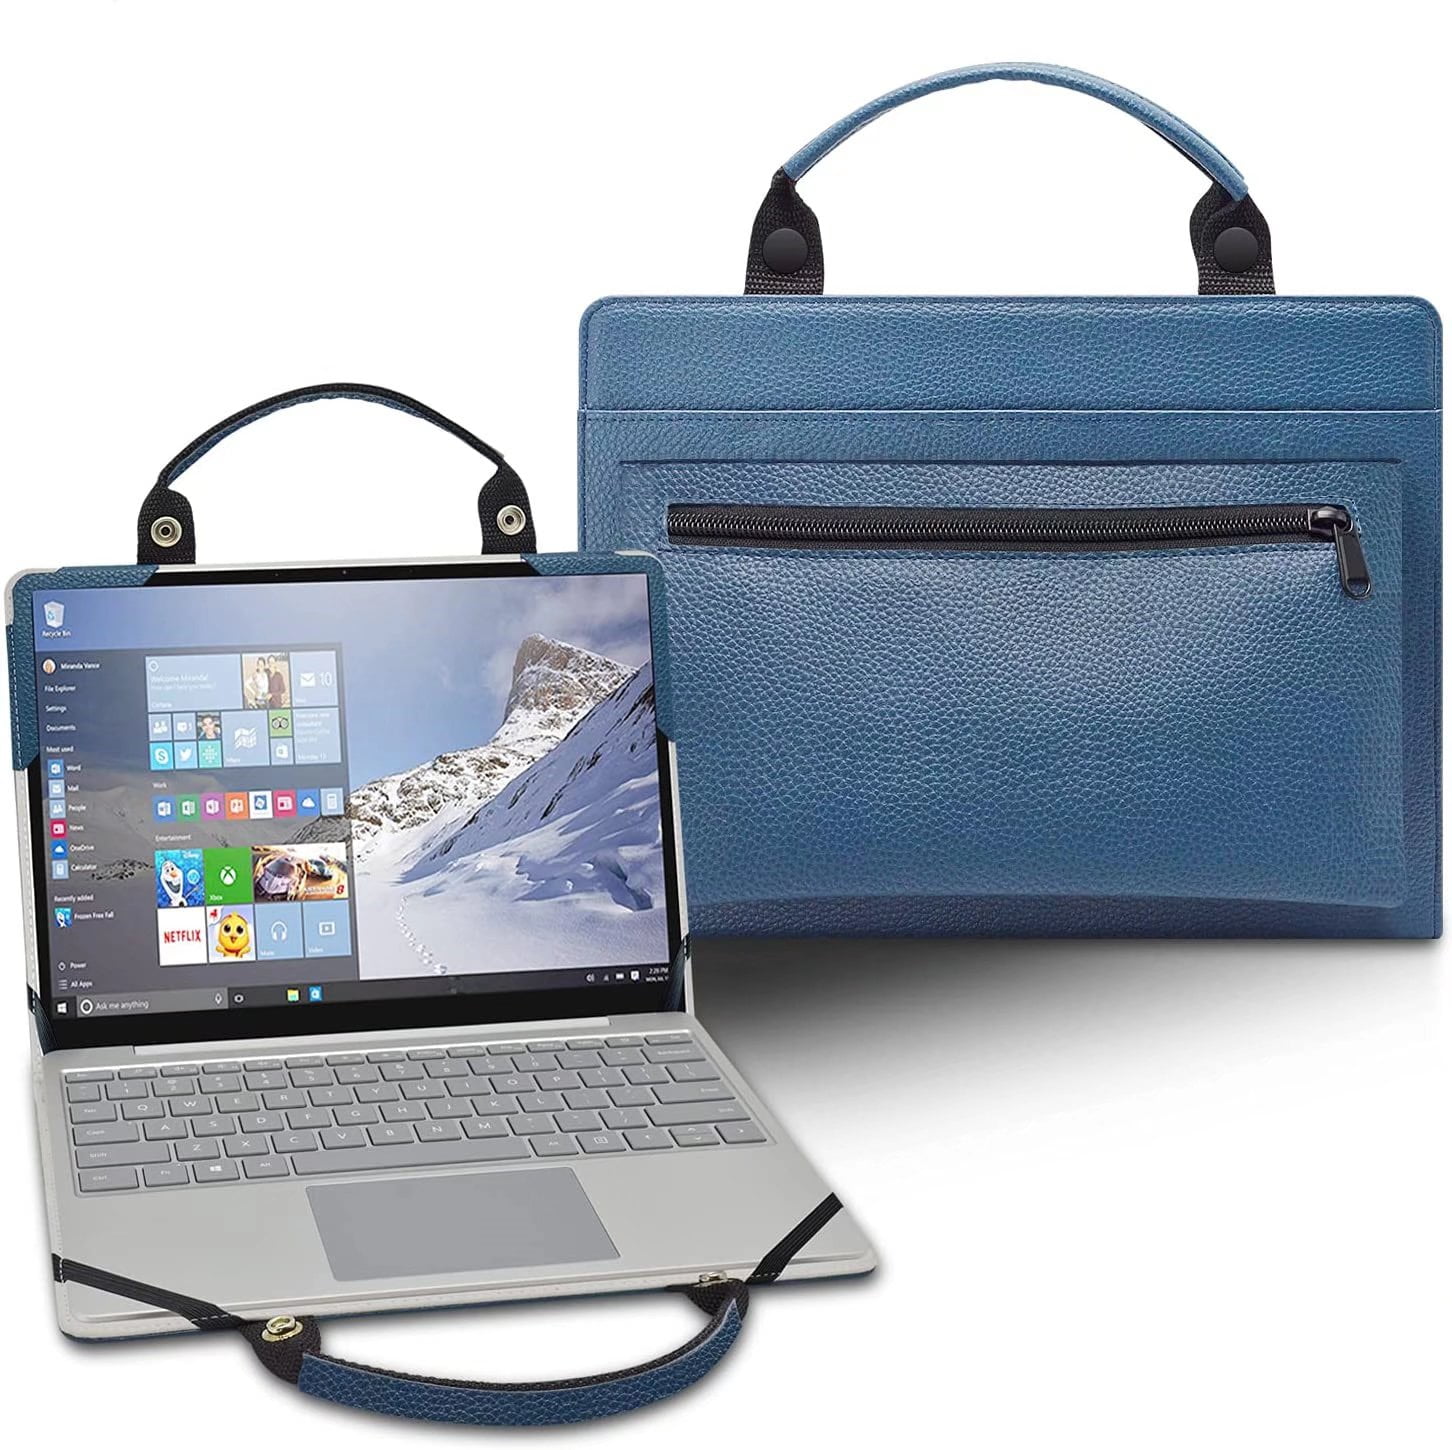 Pavilion Vangoddy 17.3 inch Laptop Case for ProBook EliteBook Stream Chromebook 